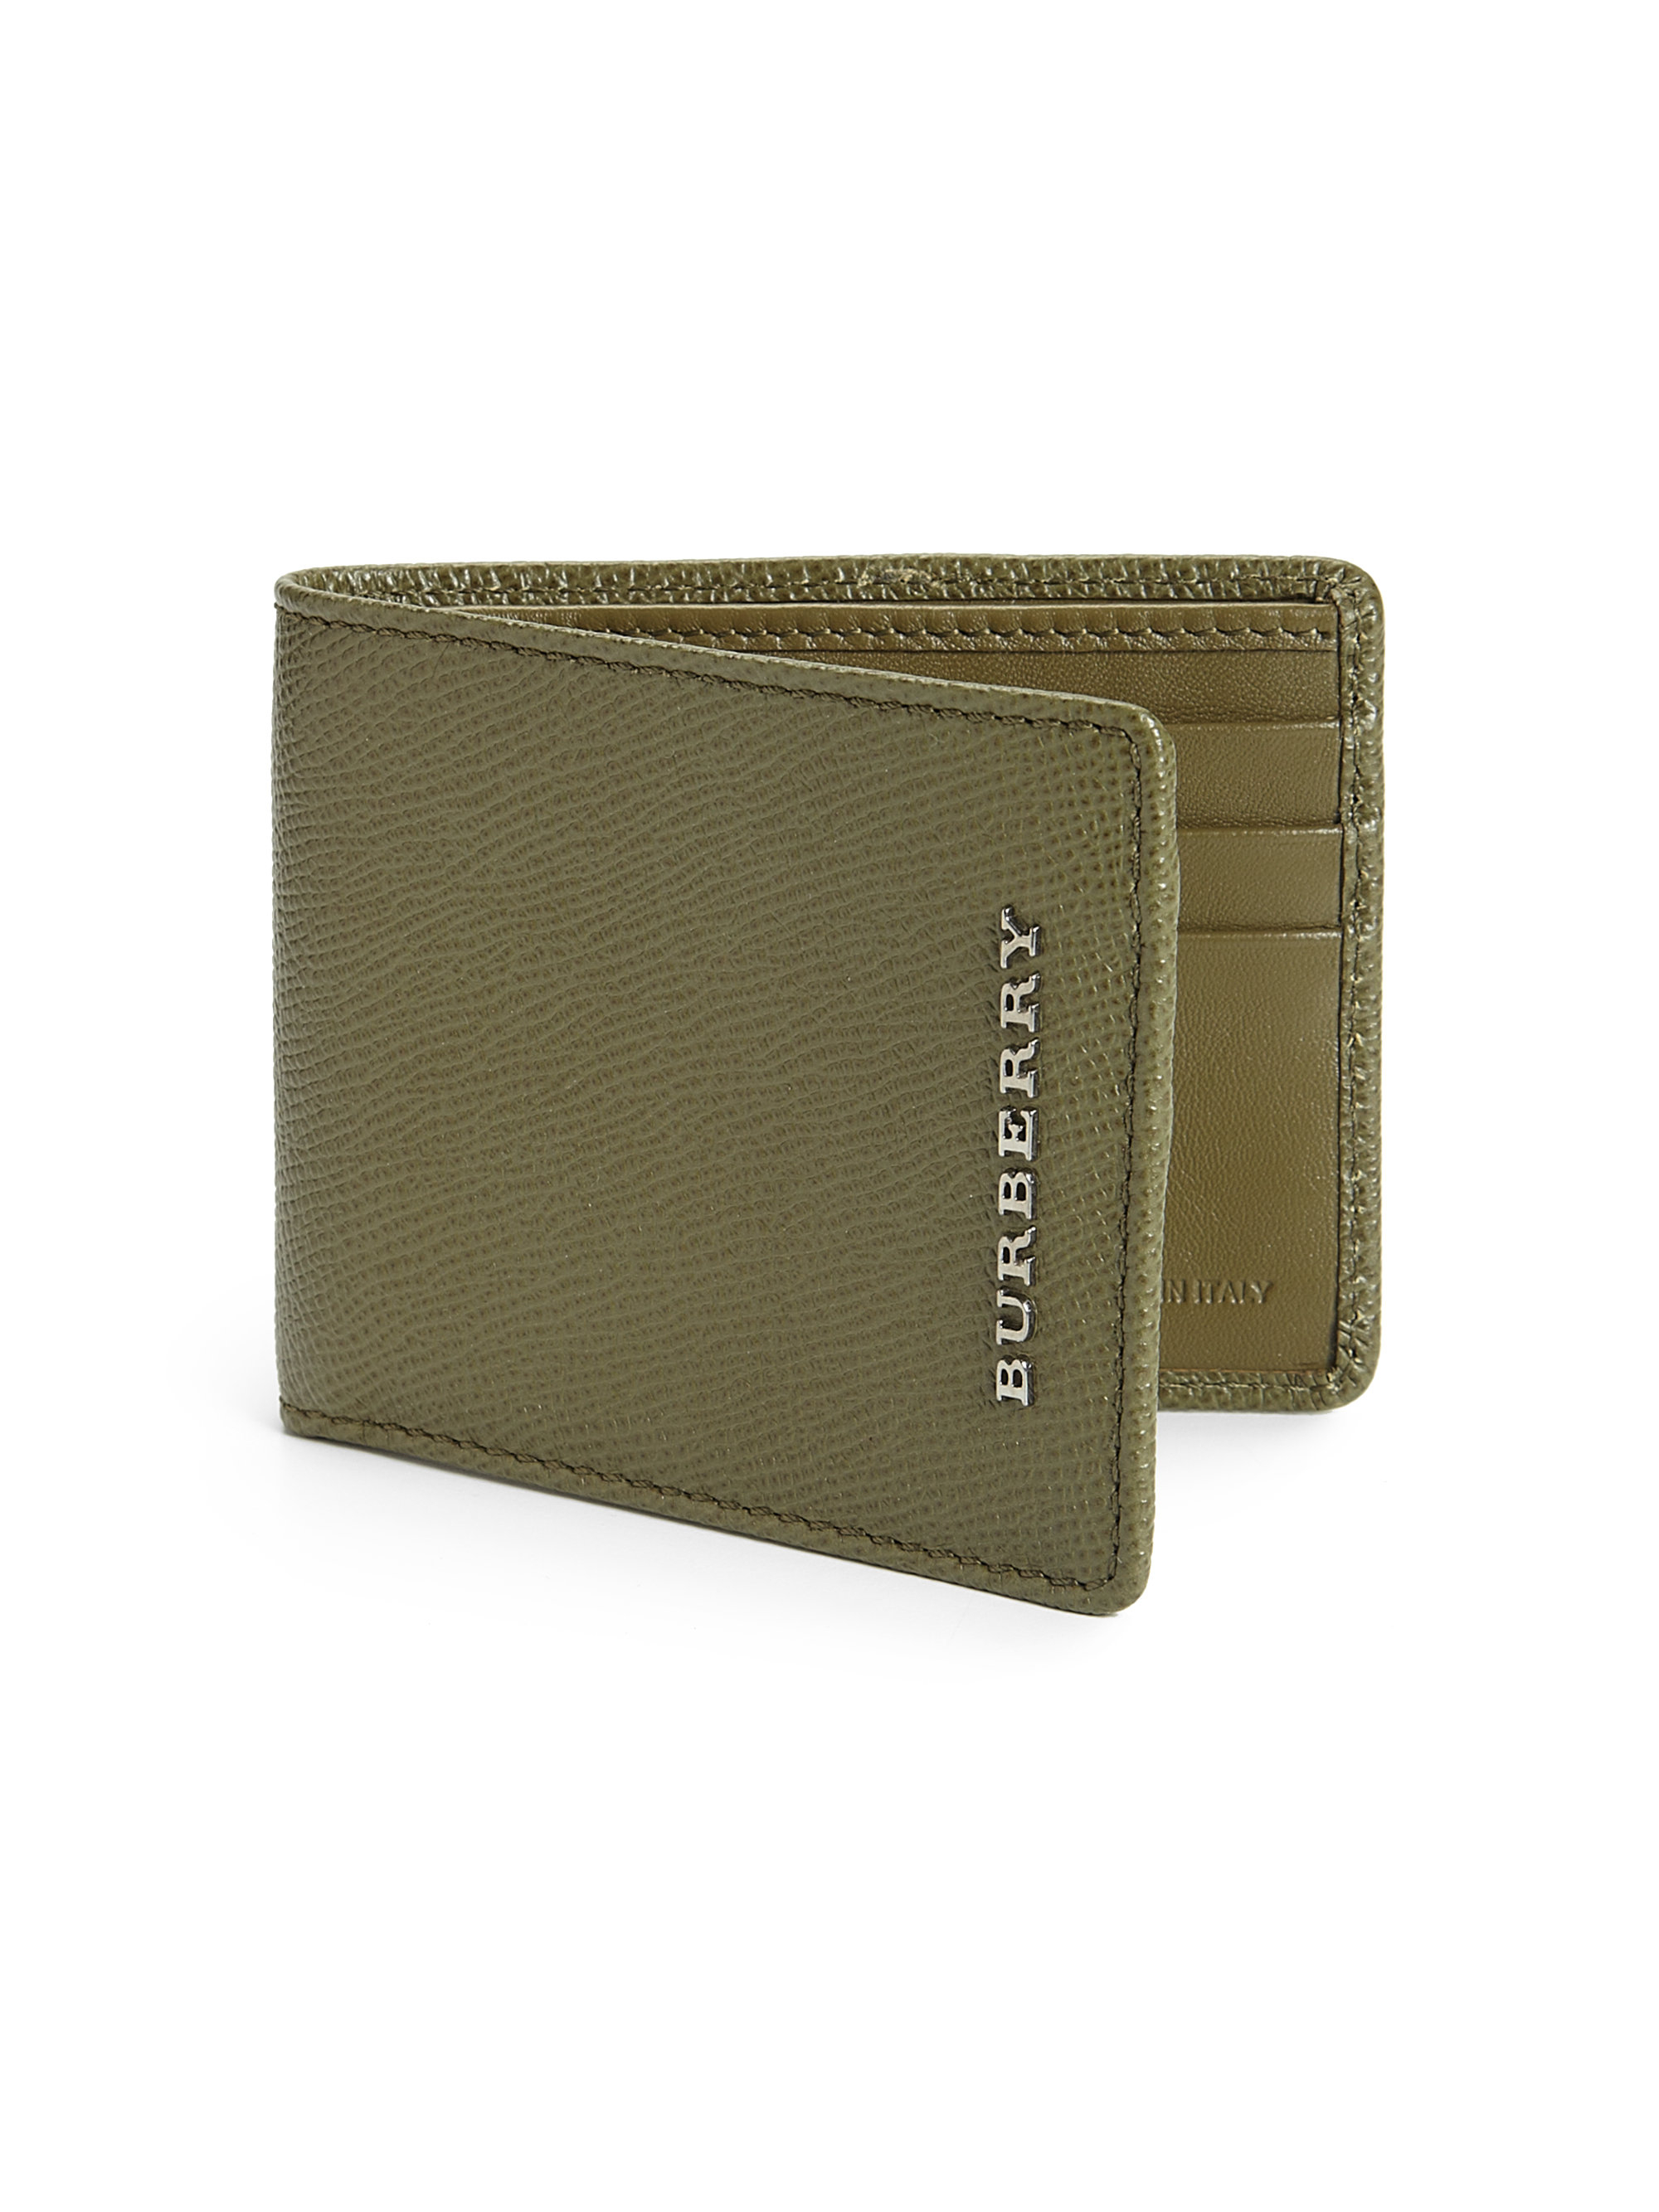 Burberry London Leather Billfold Wallet in Green for Men | Lyst